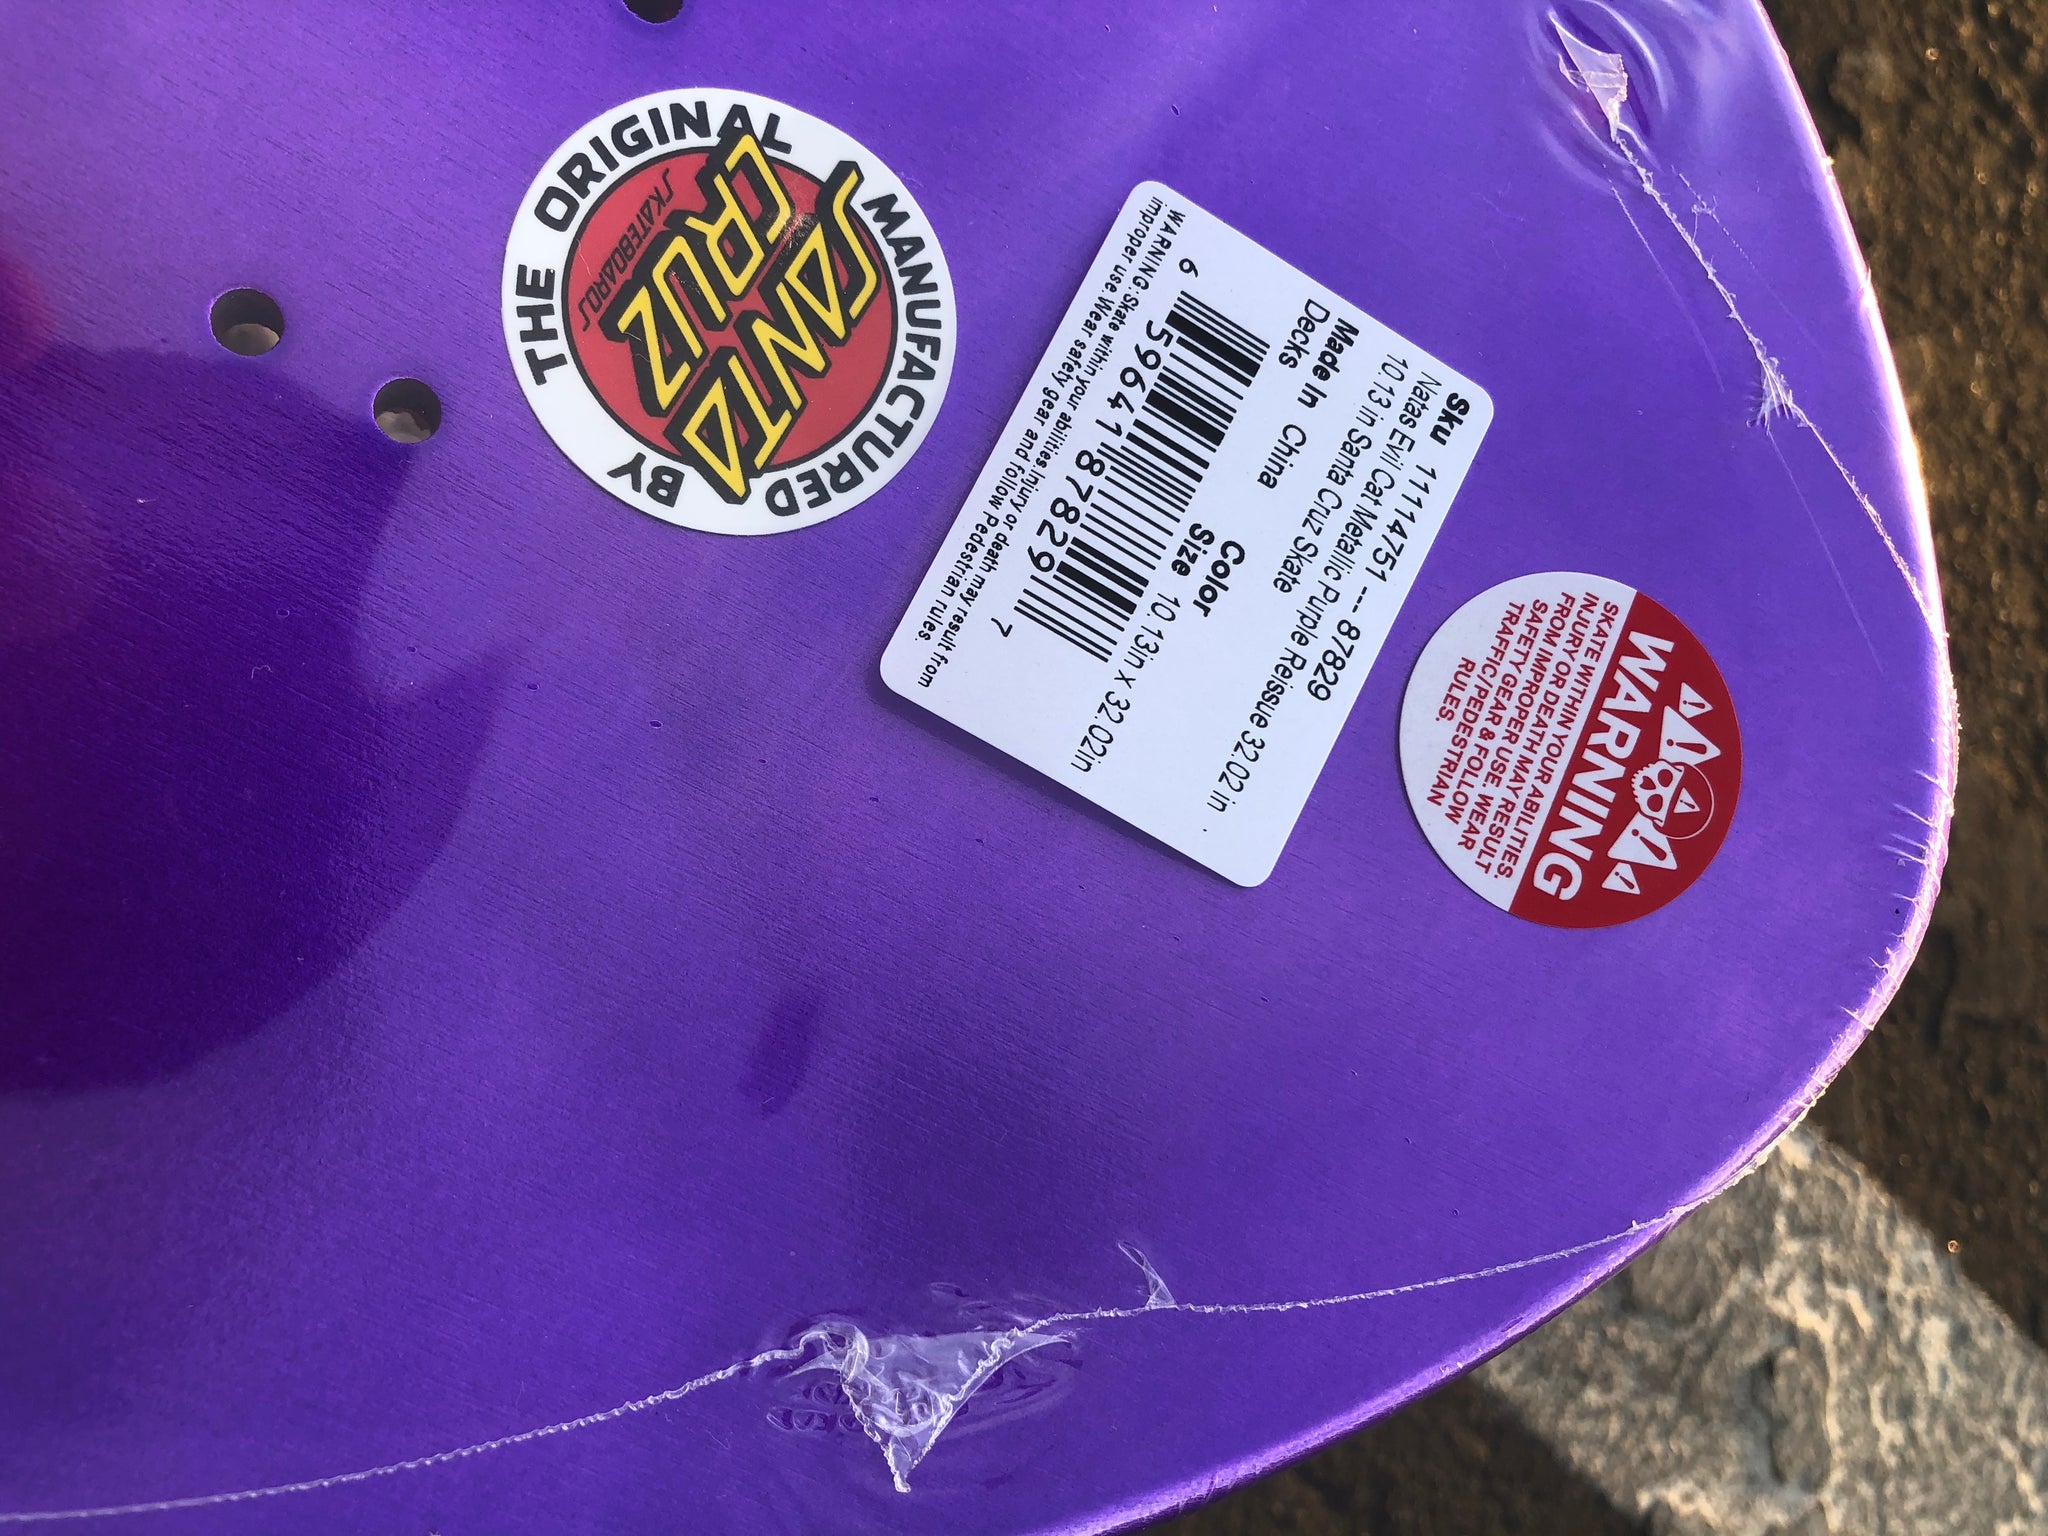 Santa Cruz Natas Evil Cat Skateboard Deck Purple Rare Metallic